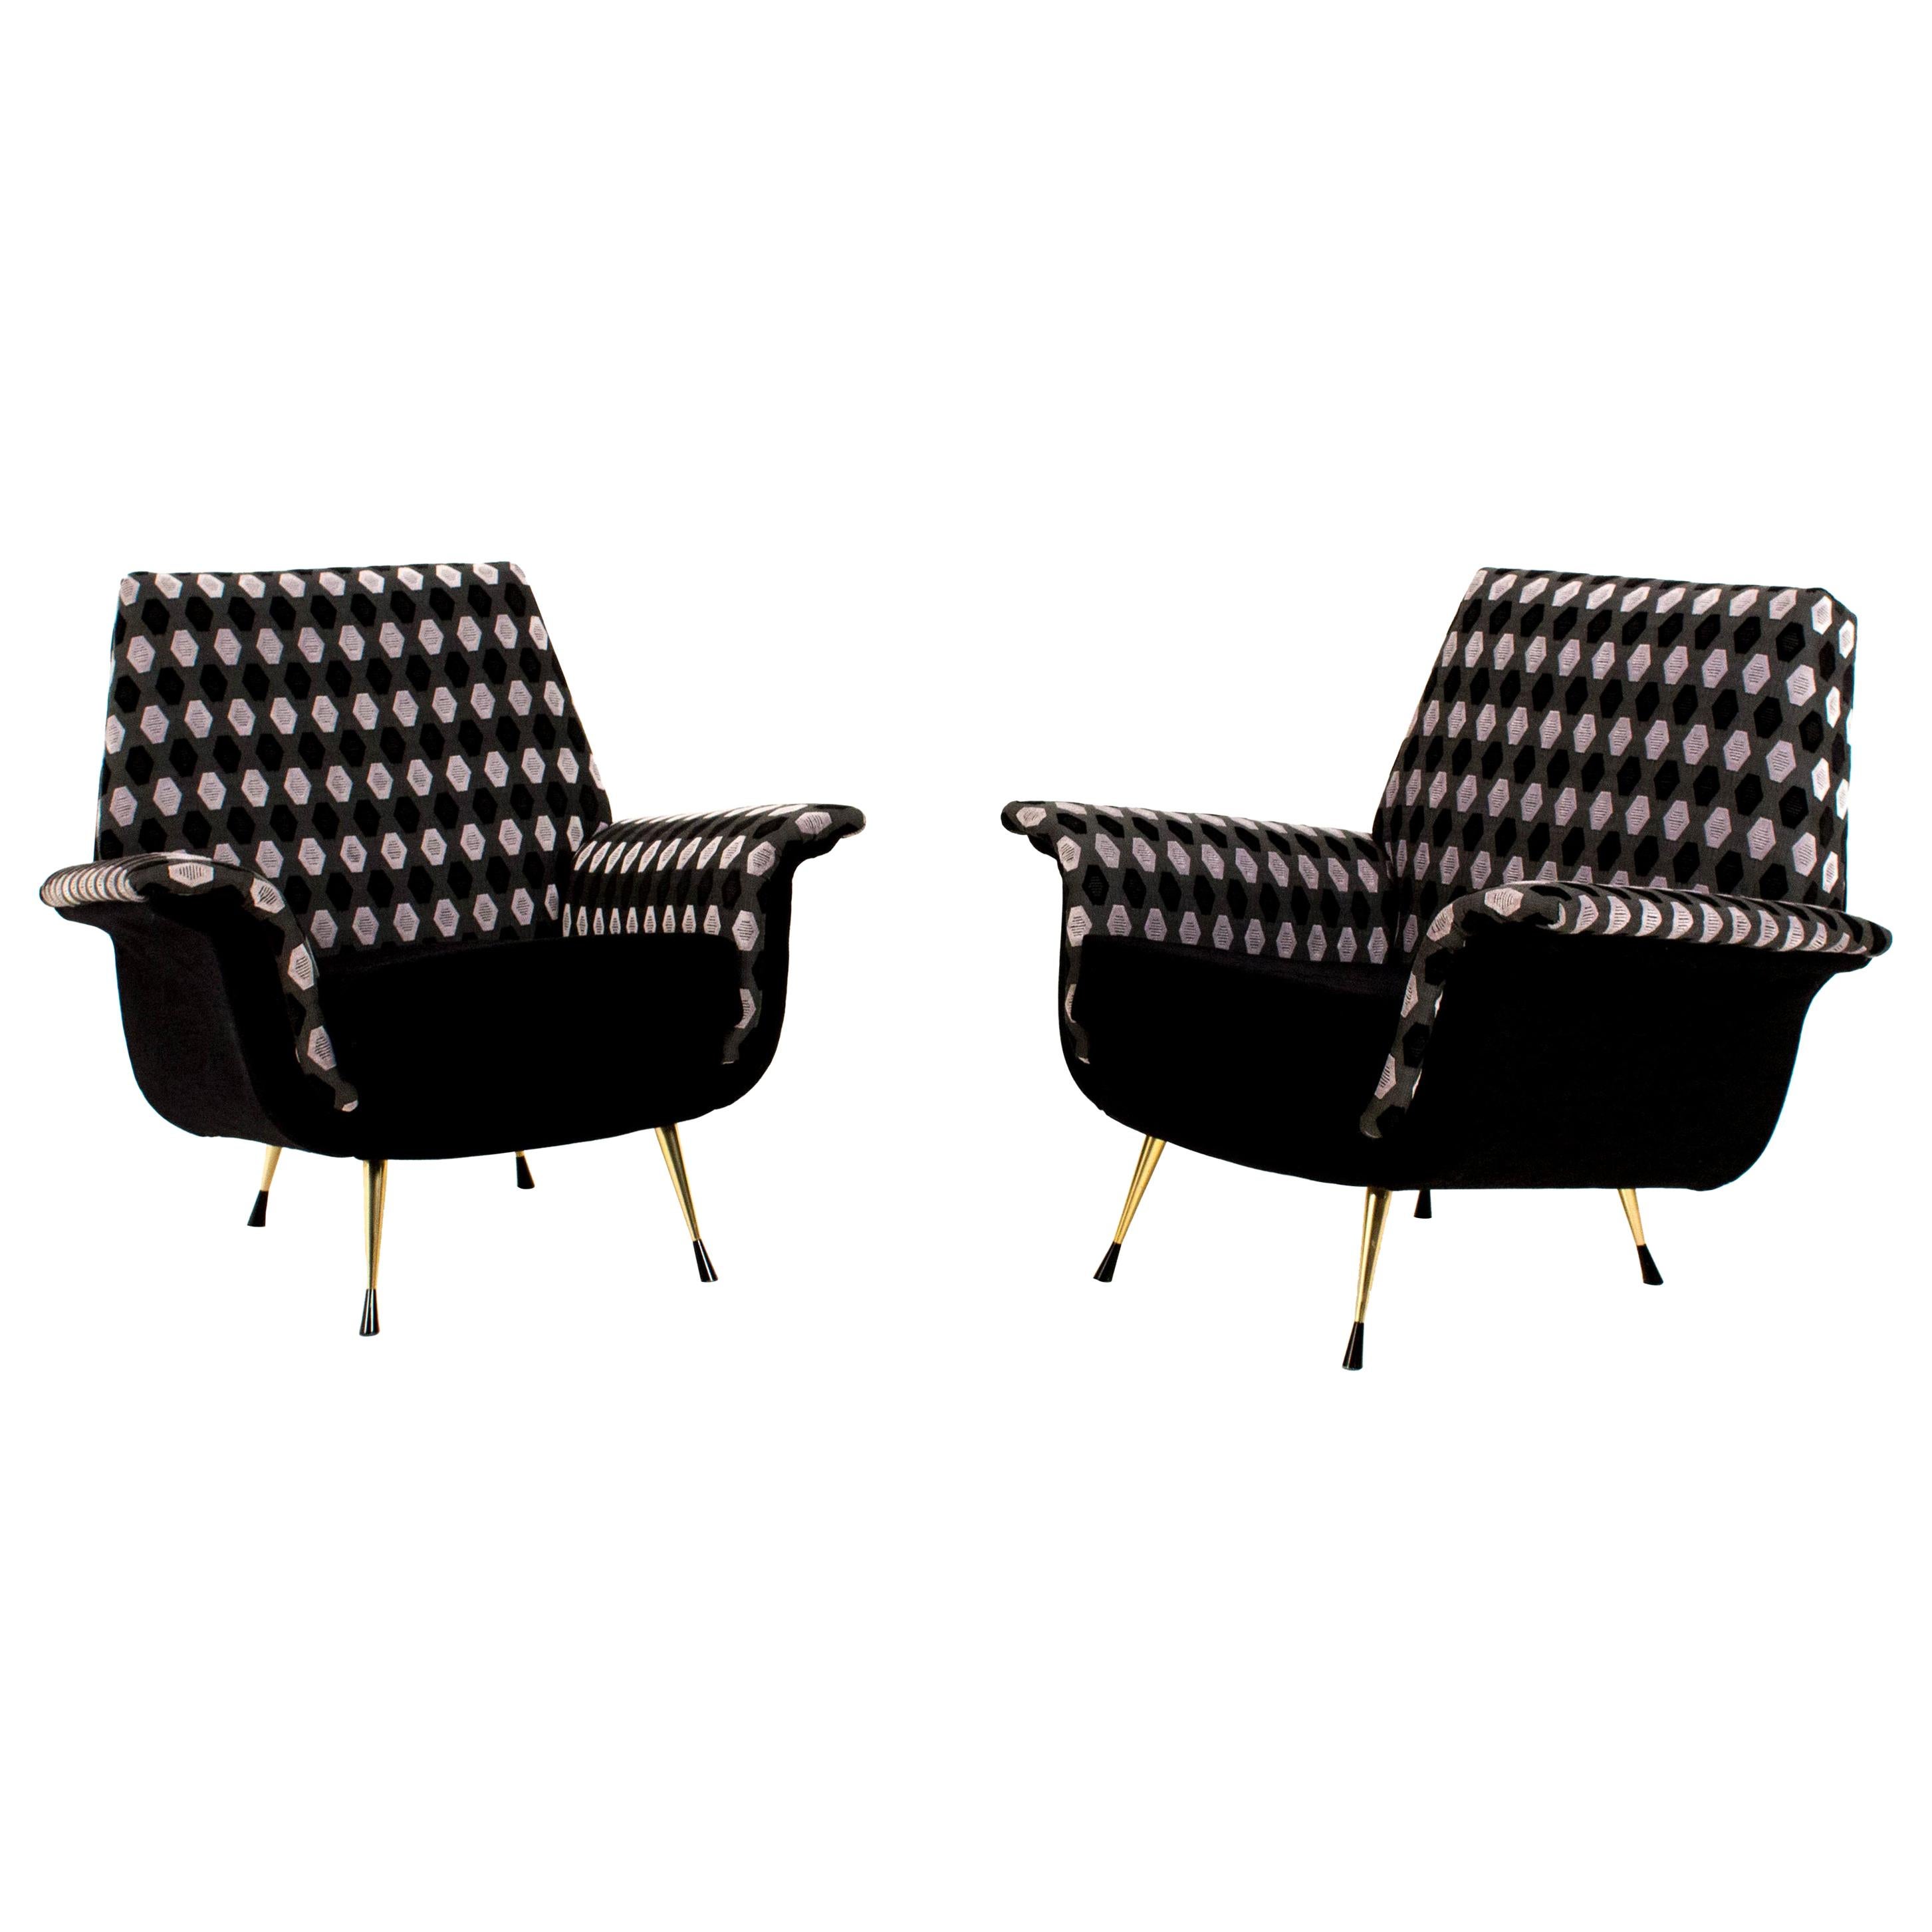 Two Italian Mid-Century Modern Lounge Chairs, 1960s